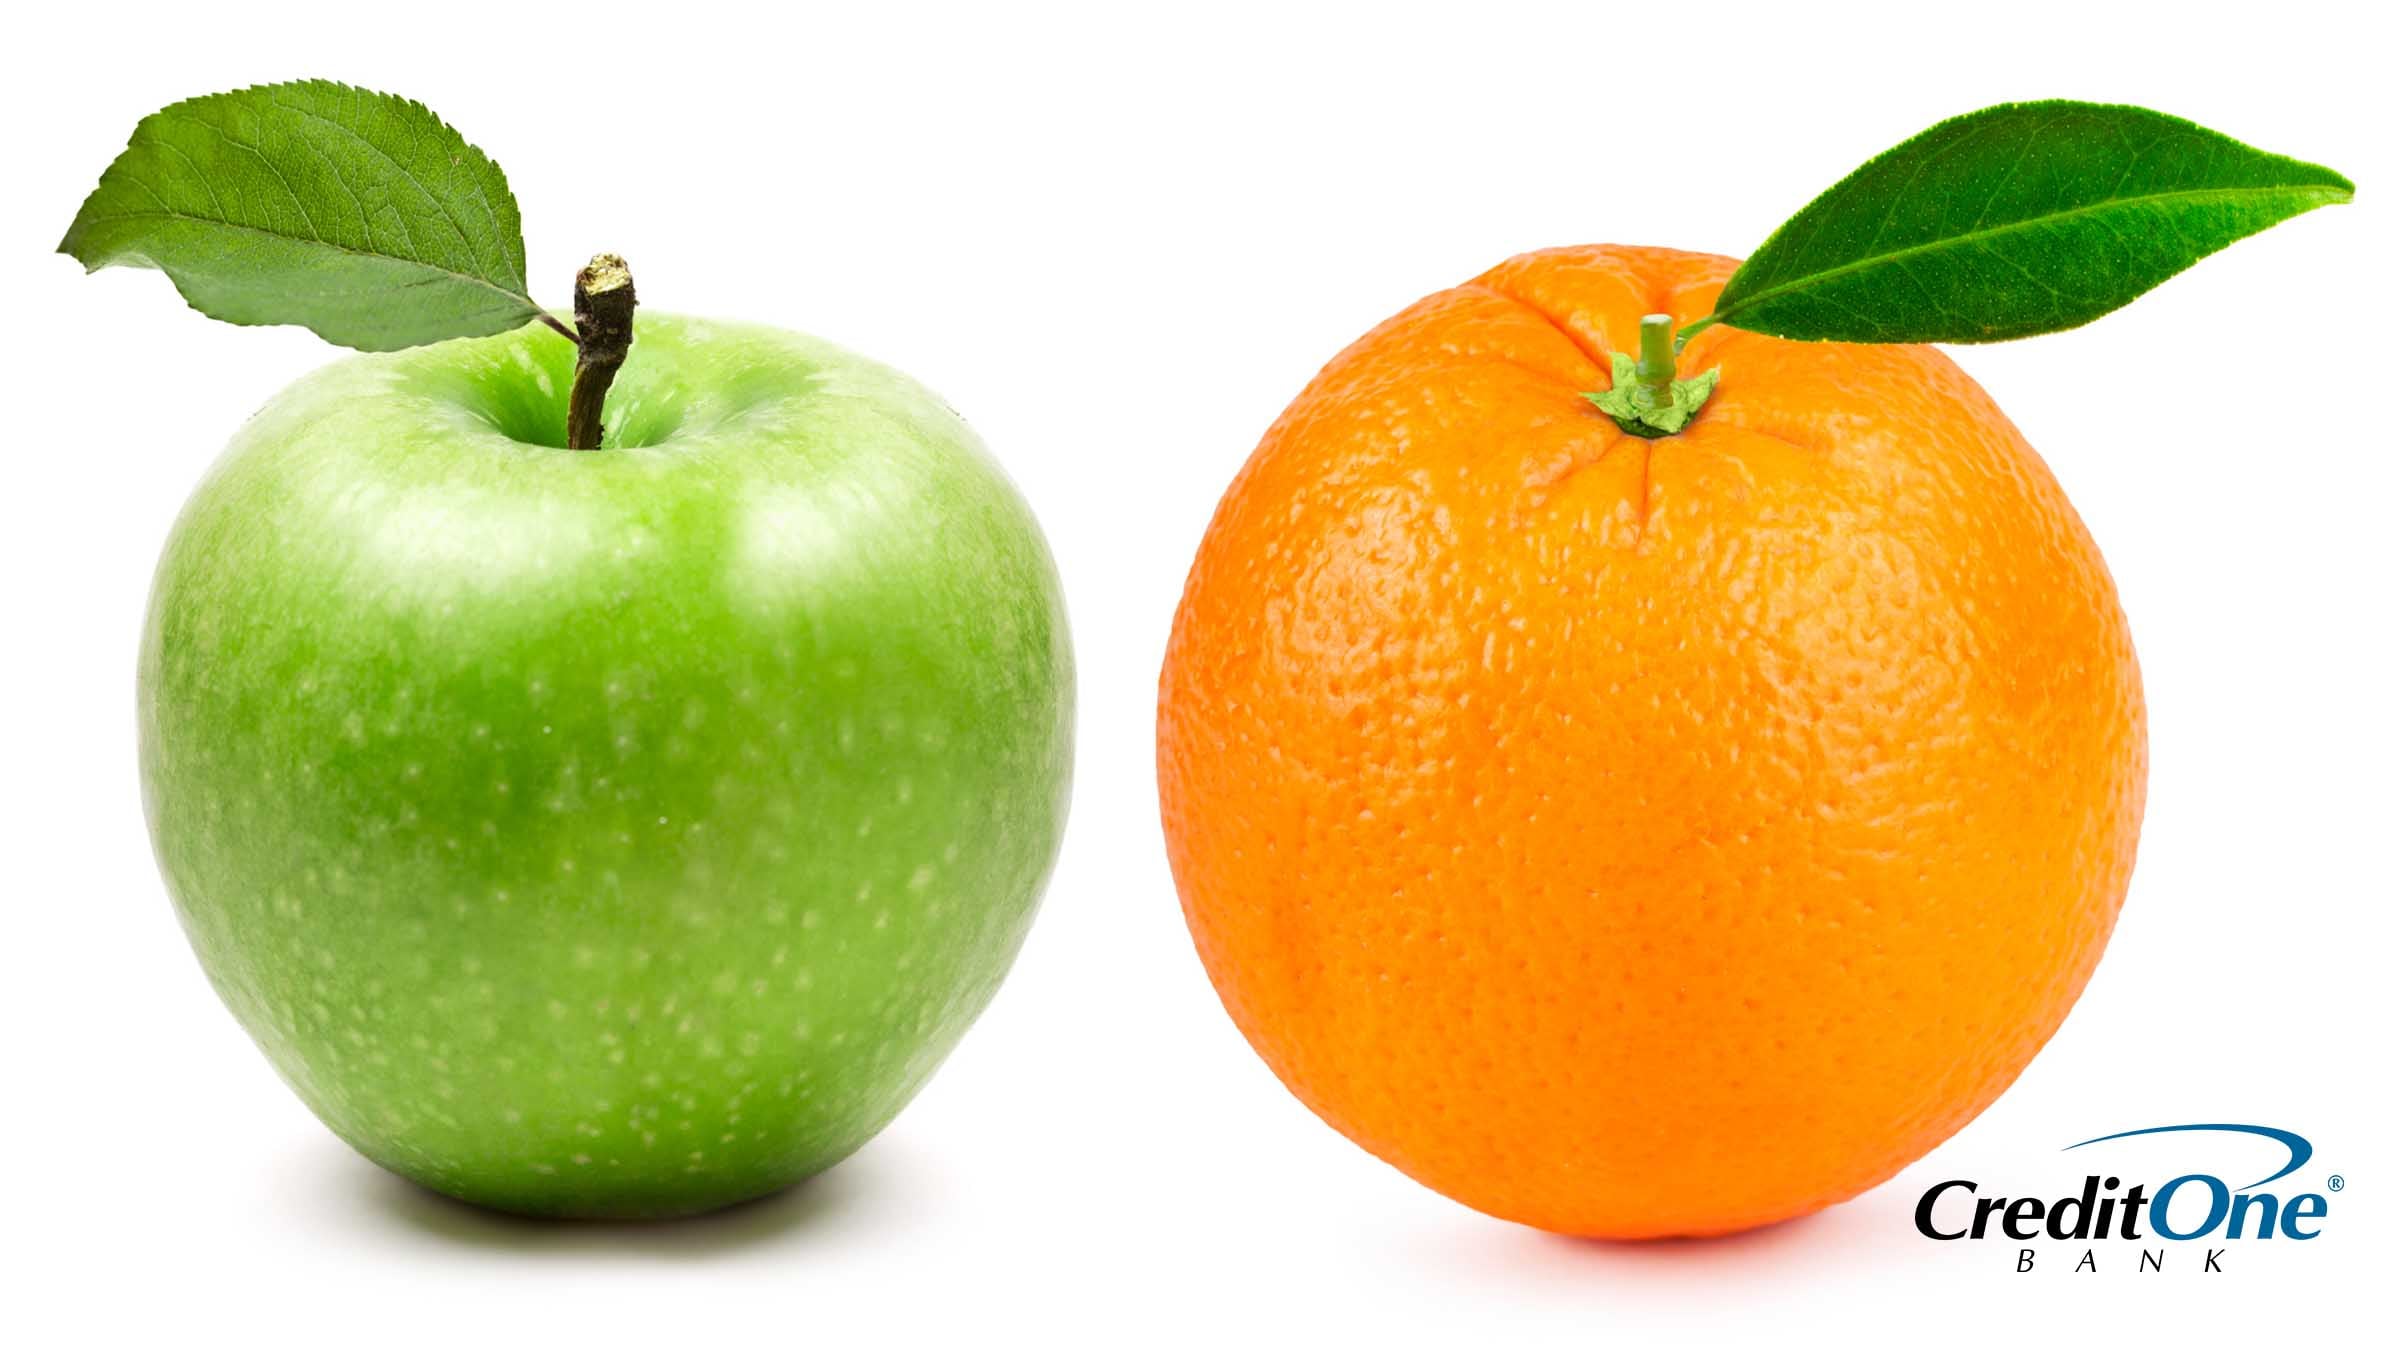 Apple compared to orange